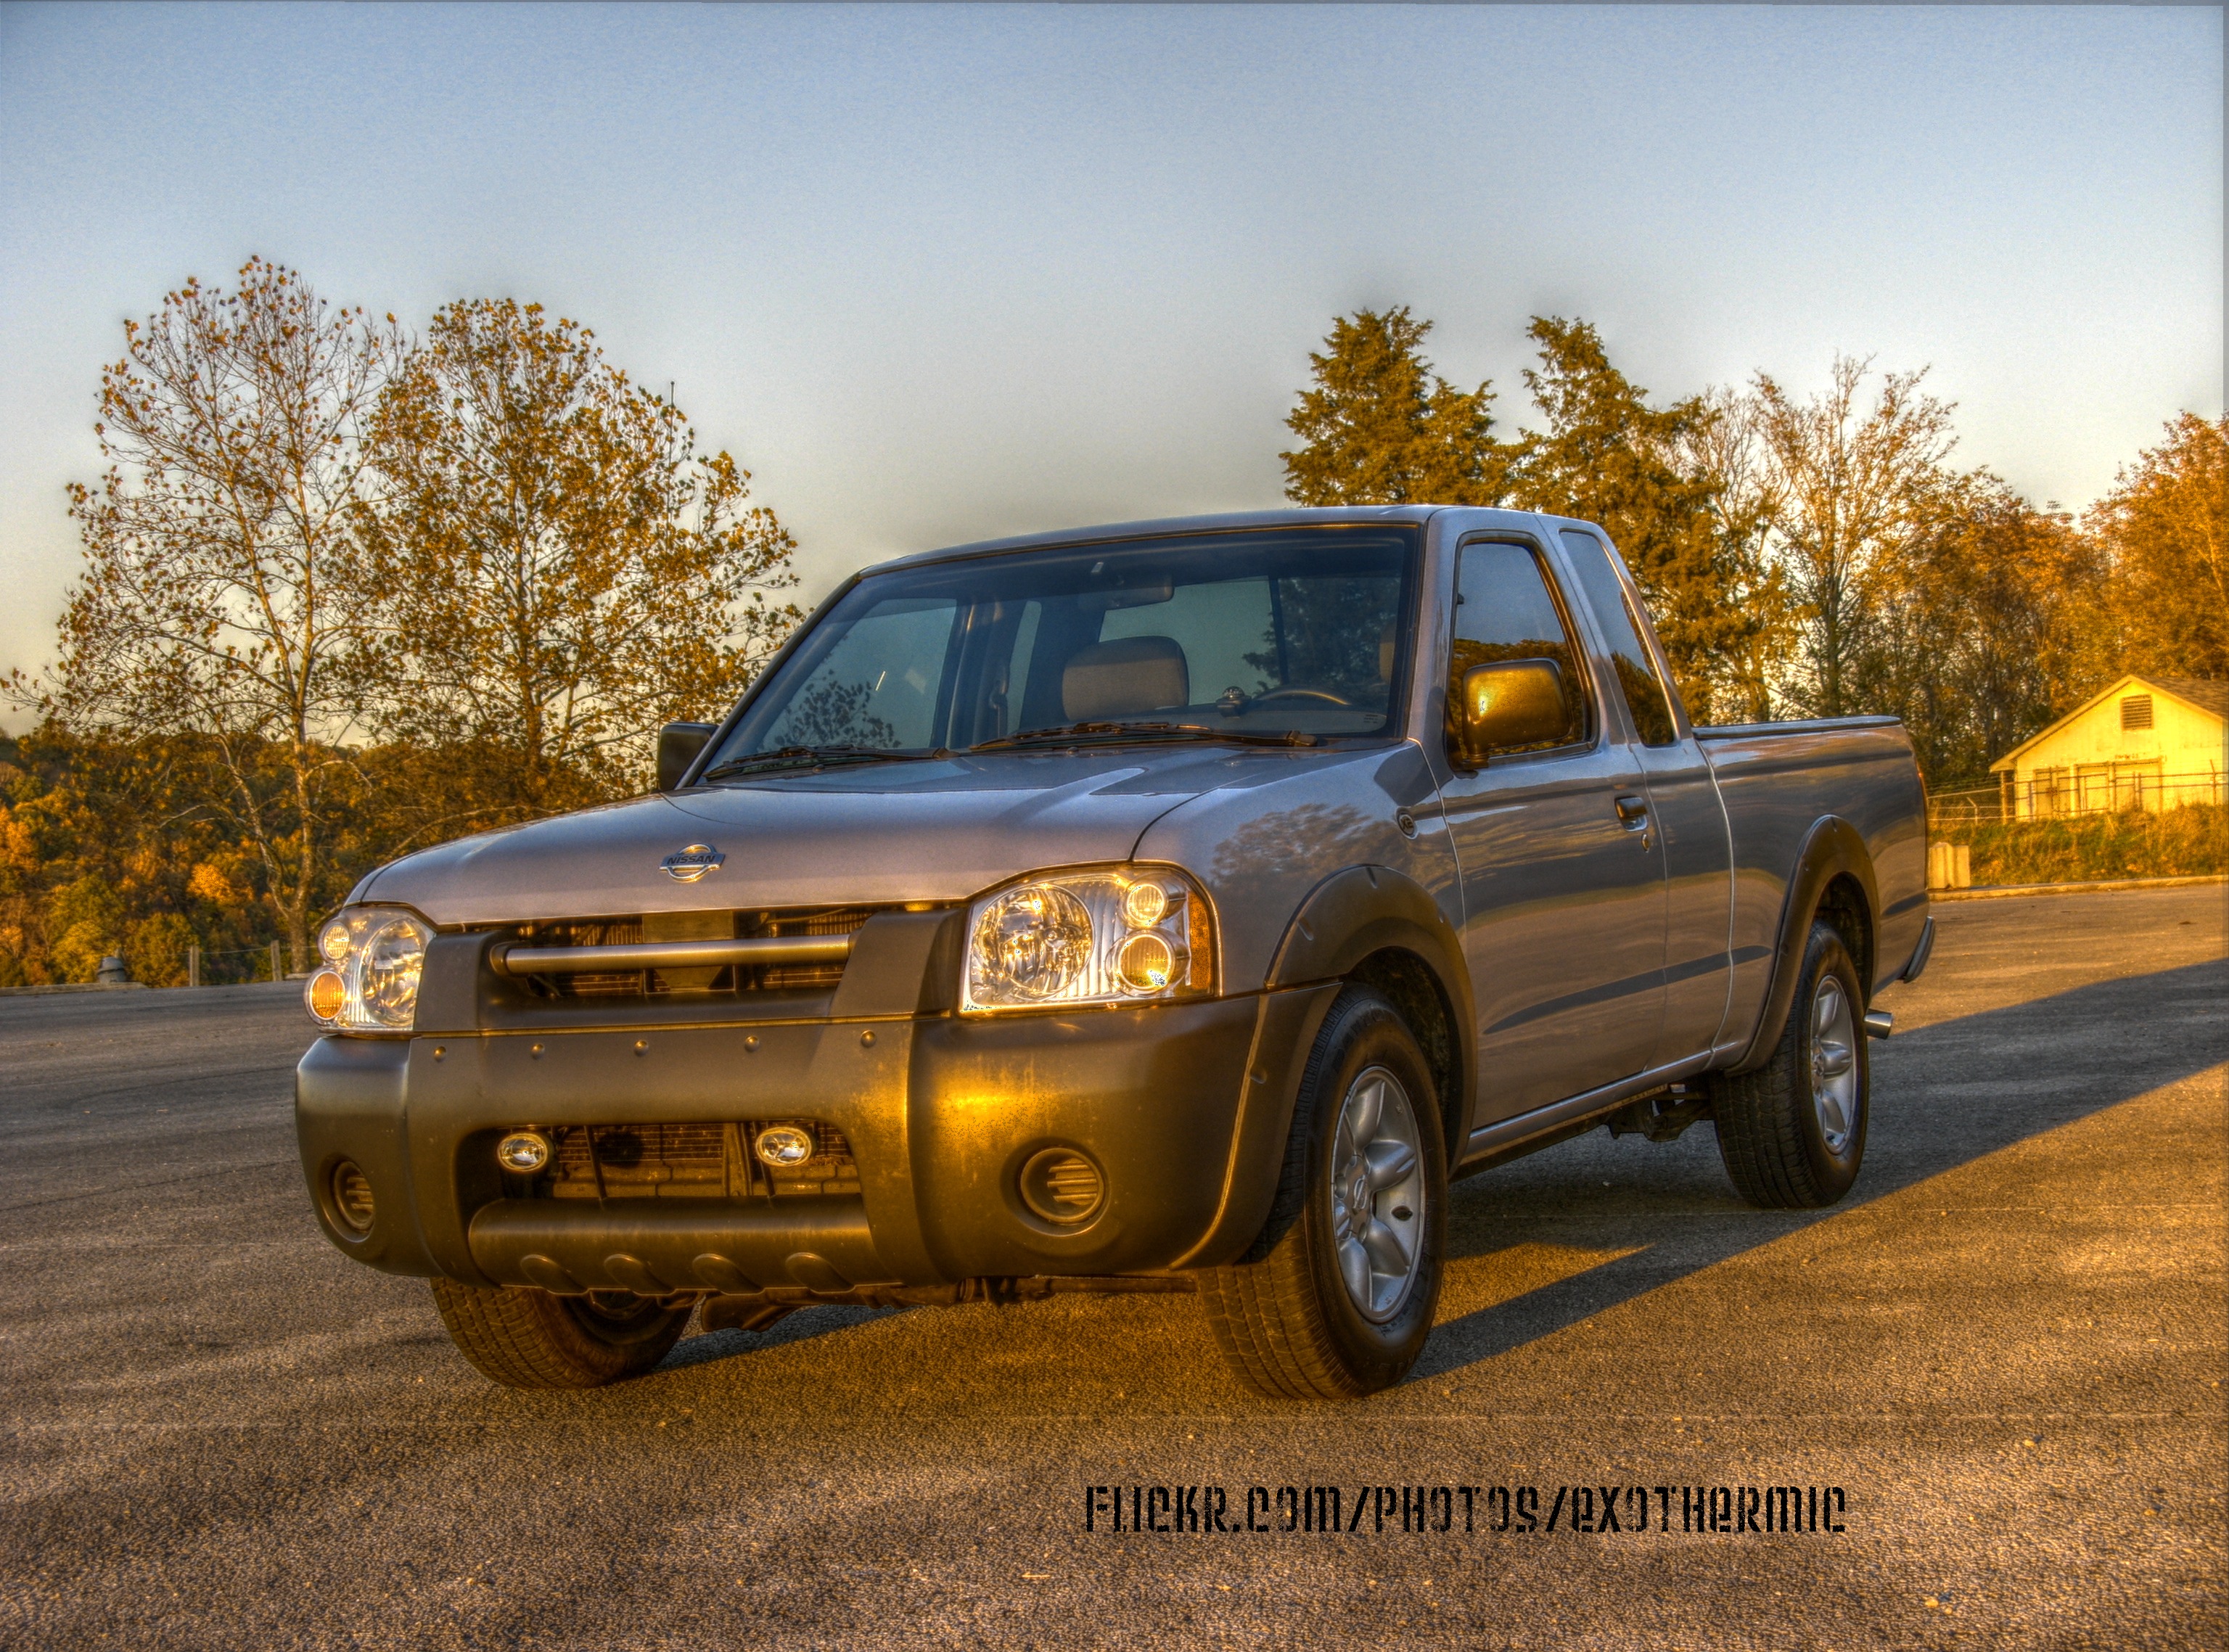 Nissan Frontier 2 | Flickr - Photo Sharing!